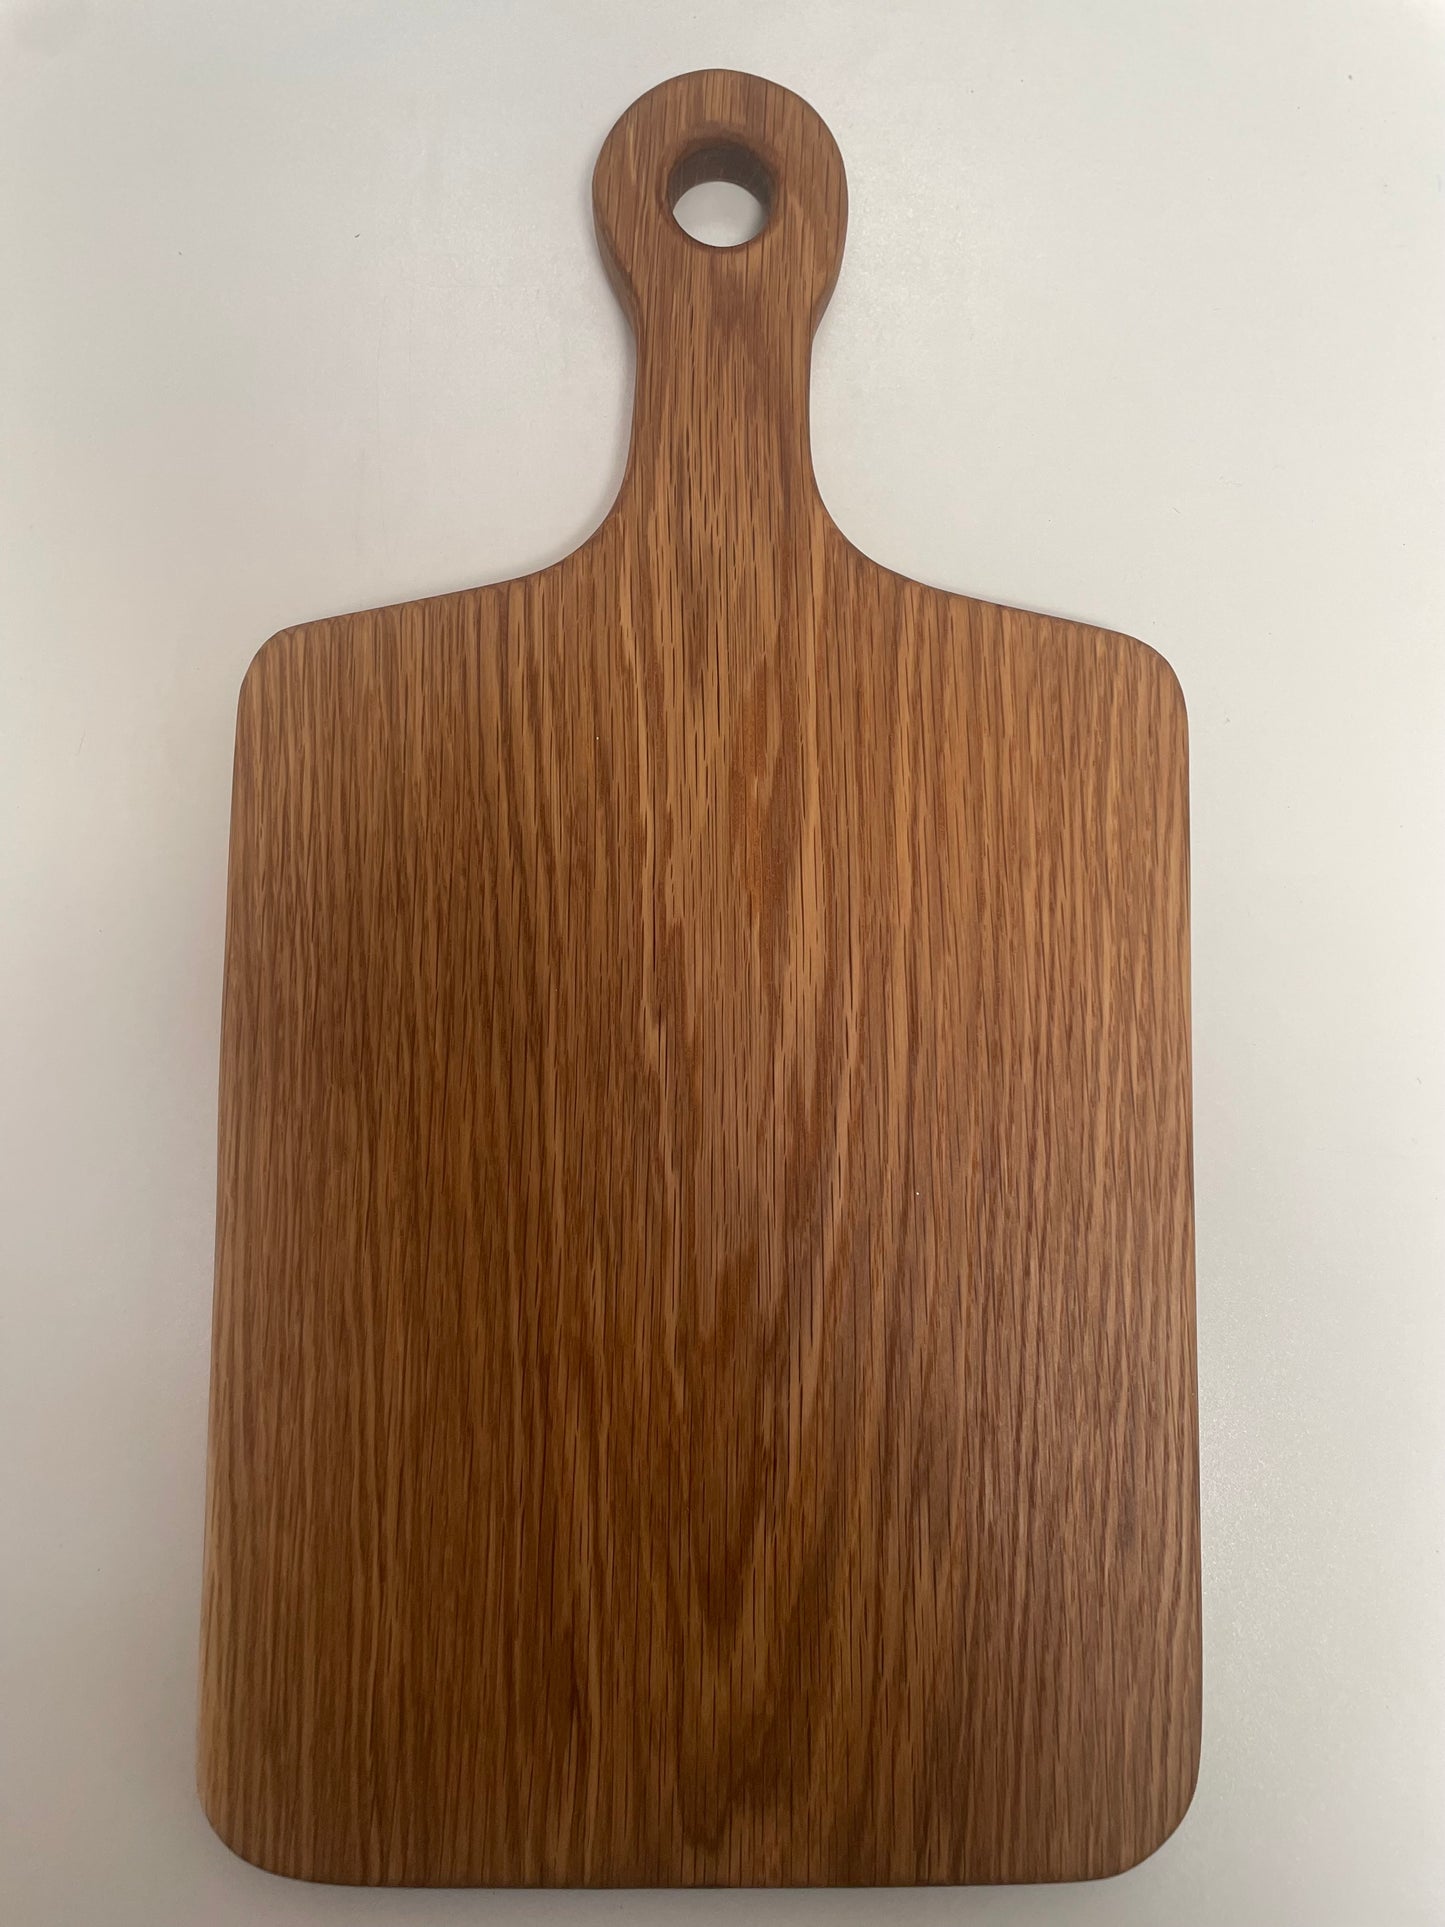 23HB01 - Large Solid White Oak Handle Board